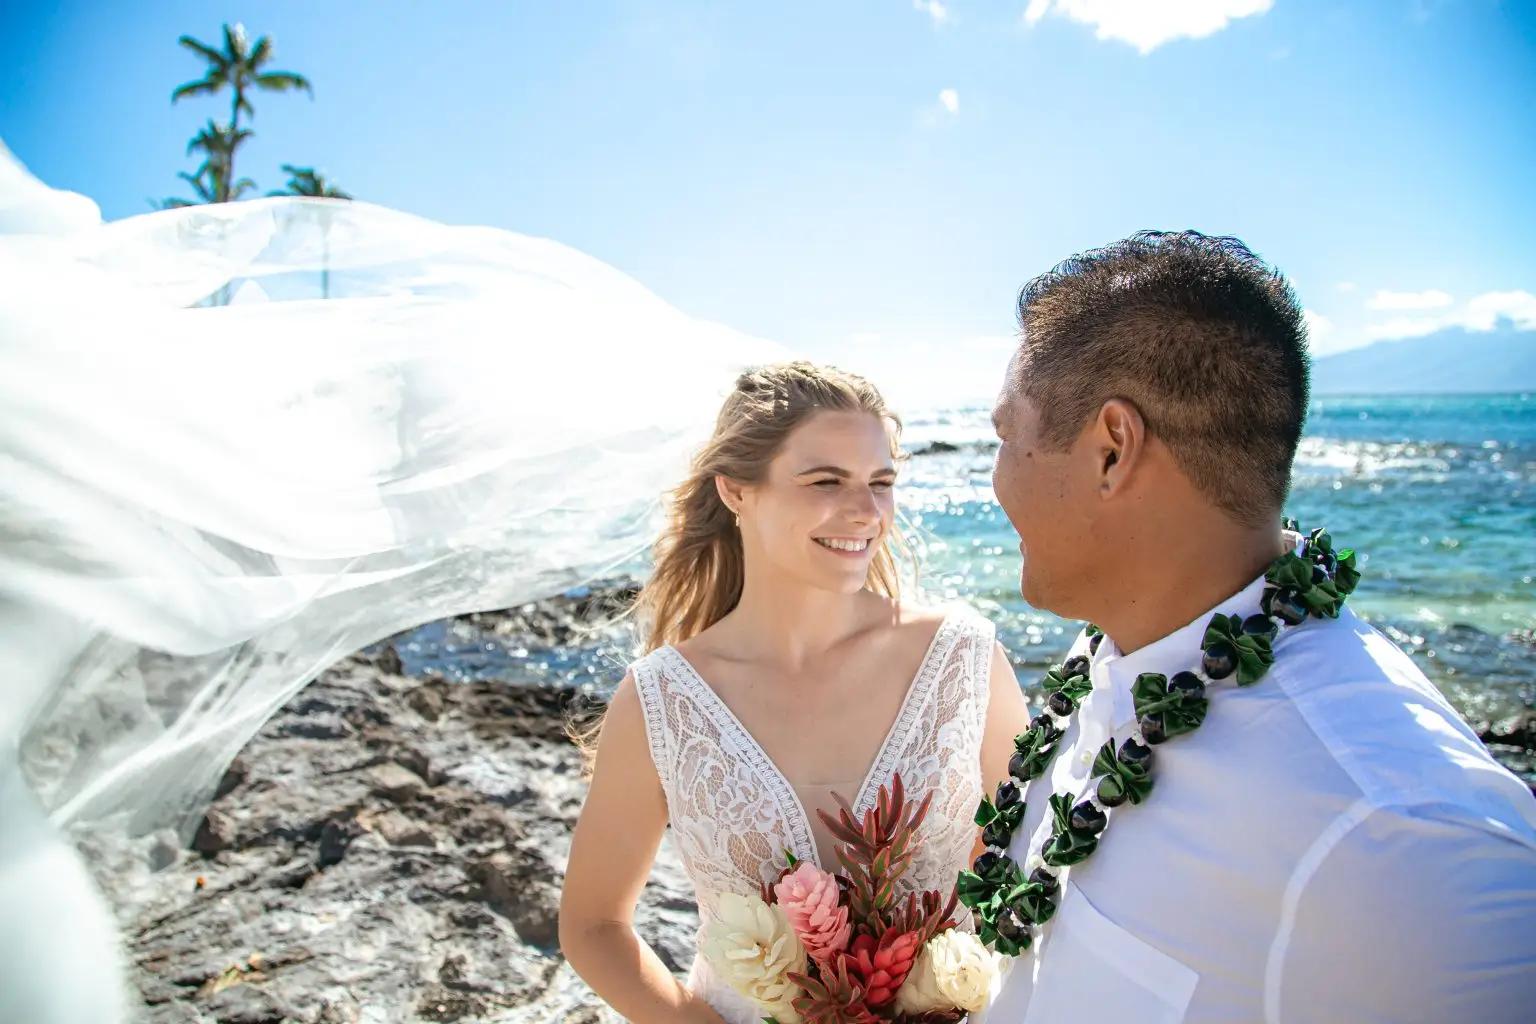 Love Always Wins | A Real Bride’s Heartfelt Story &amp; Casual Beach Wedding Image